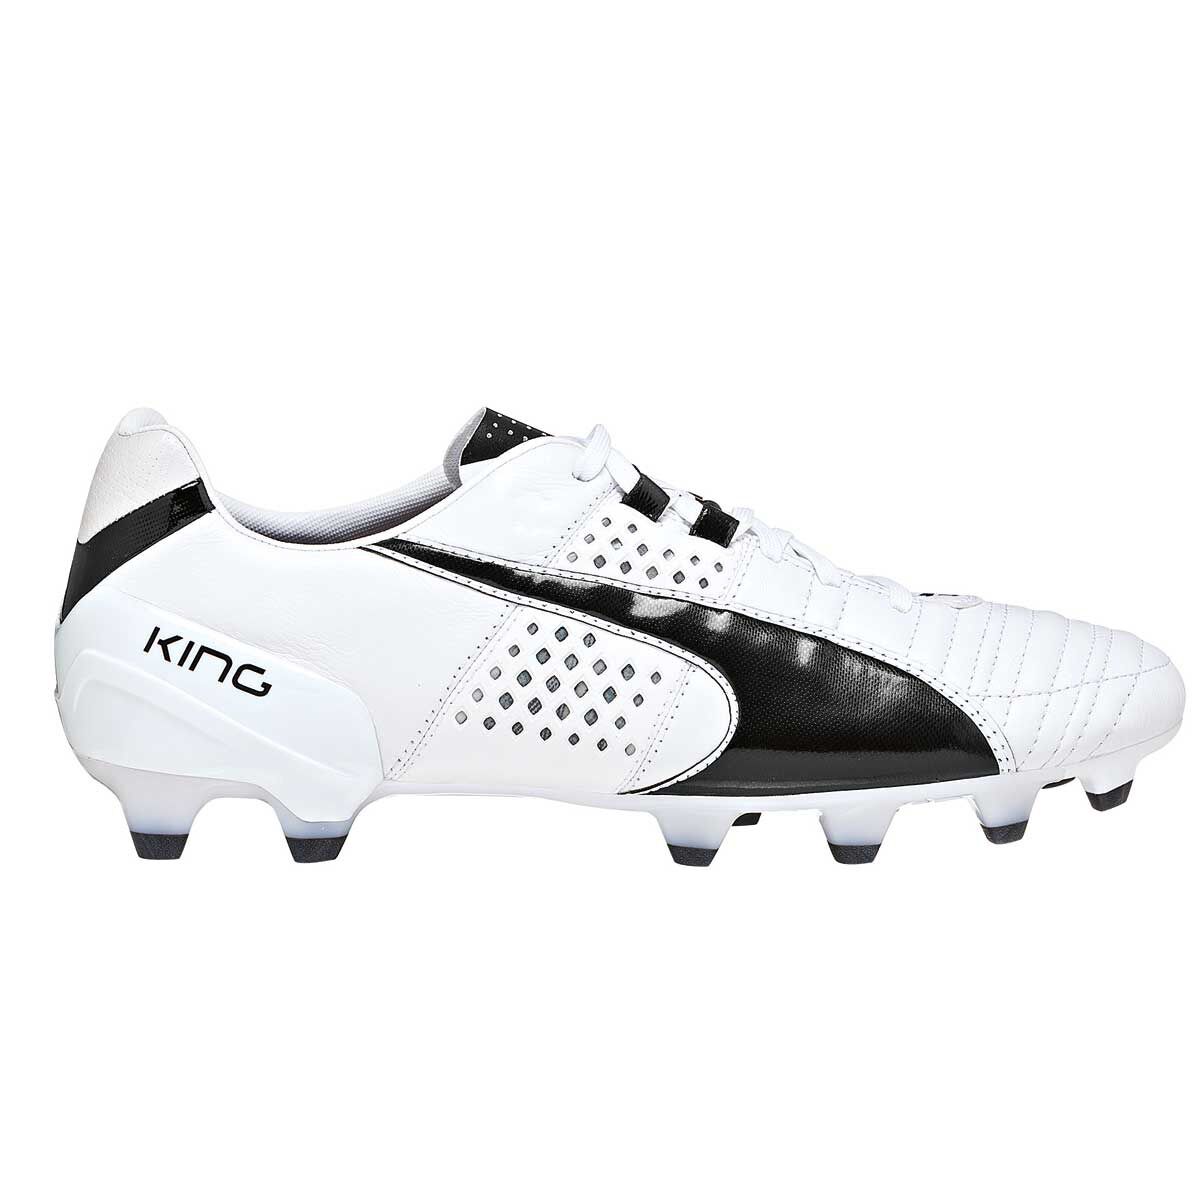 puma king football boots ebay